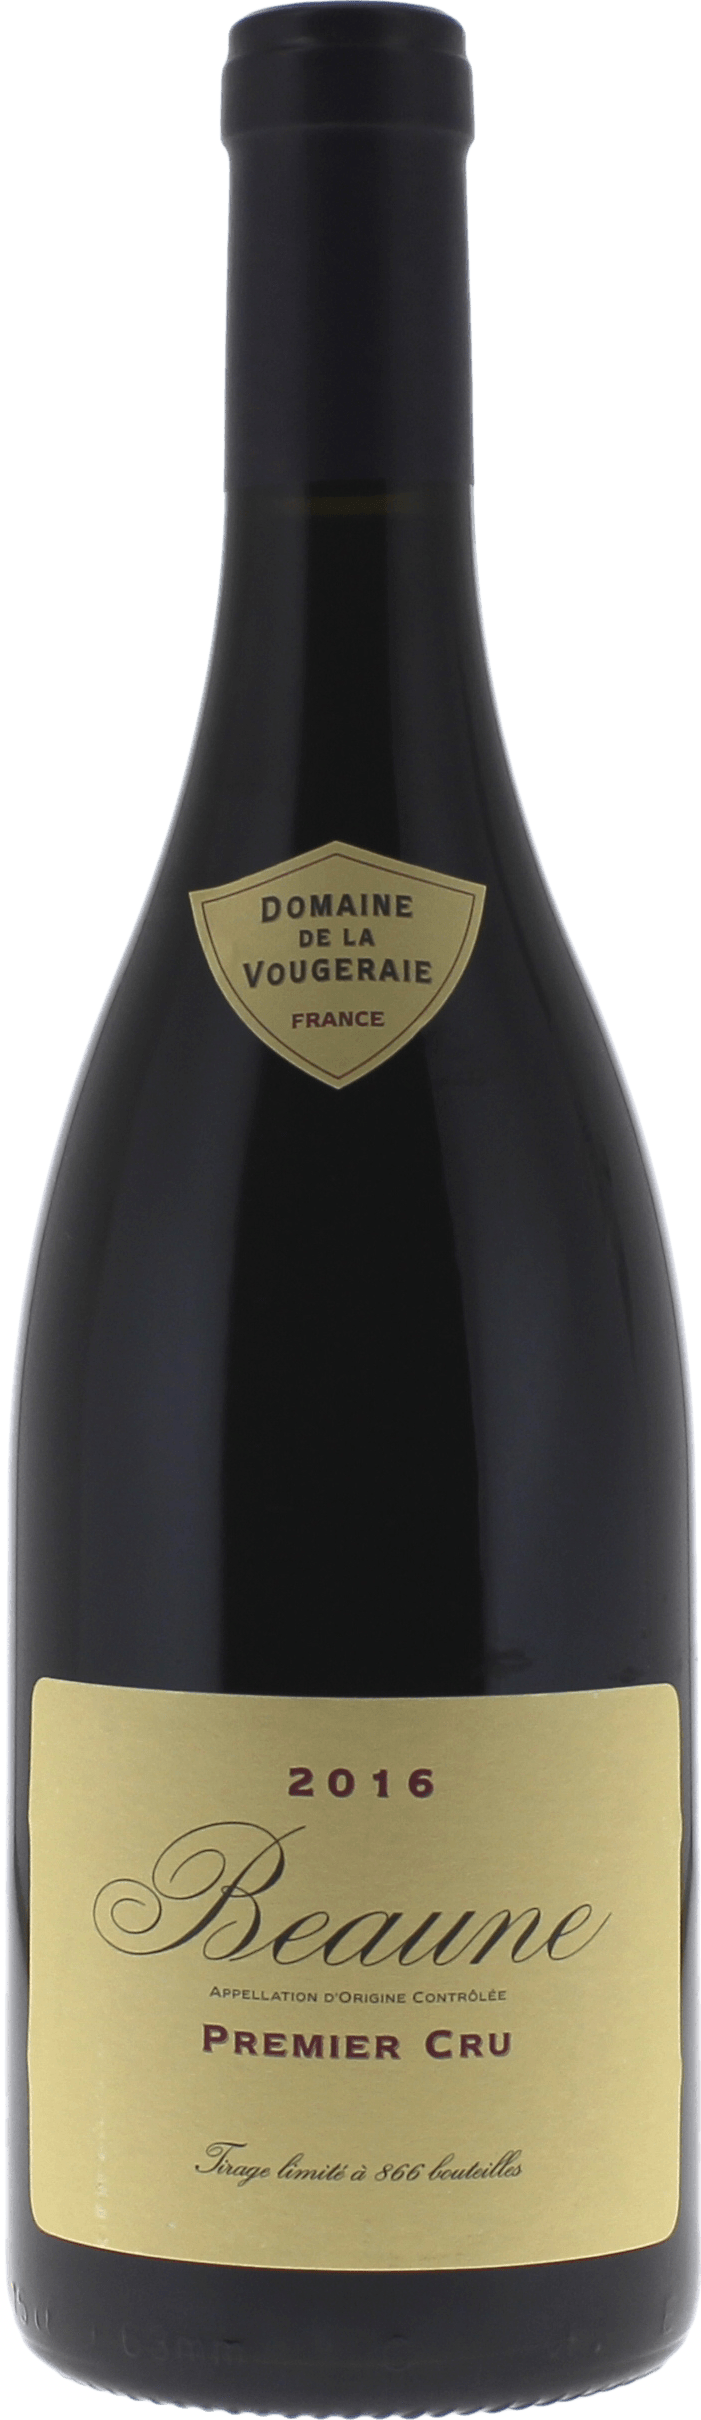 Beaune 1er cru 2016 Domaine VOUGERAIE, Bourgogne rouge